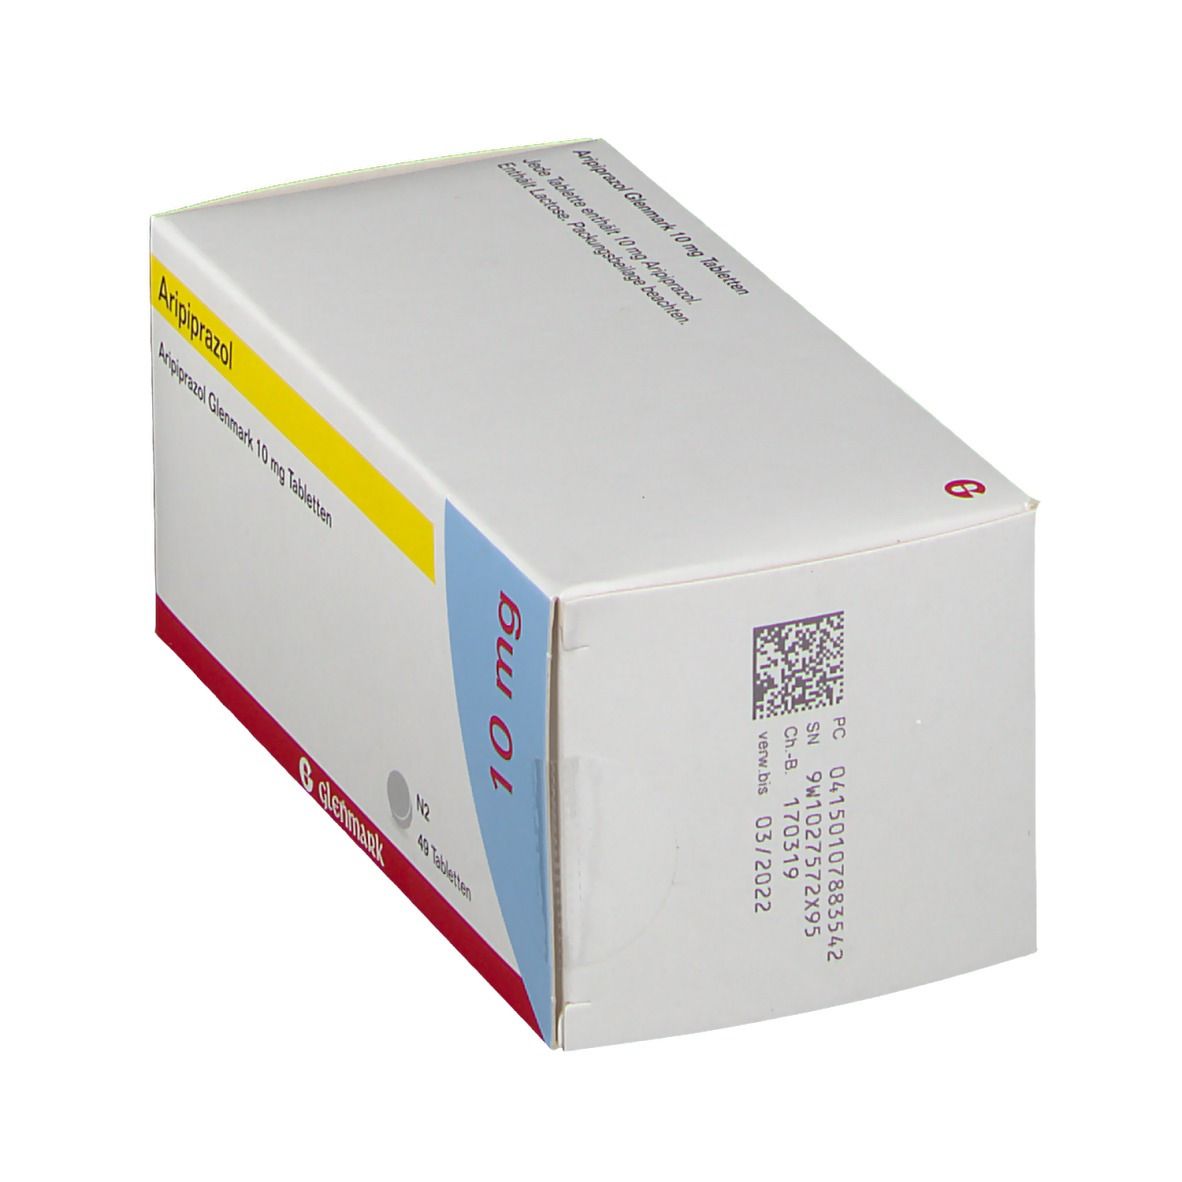 Aripiprazol Glenmark 10 mg